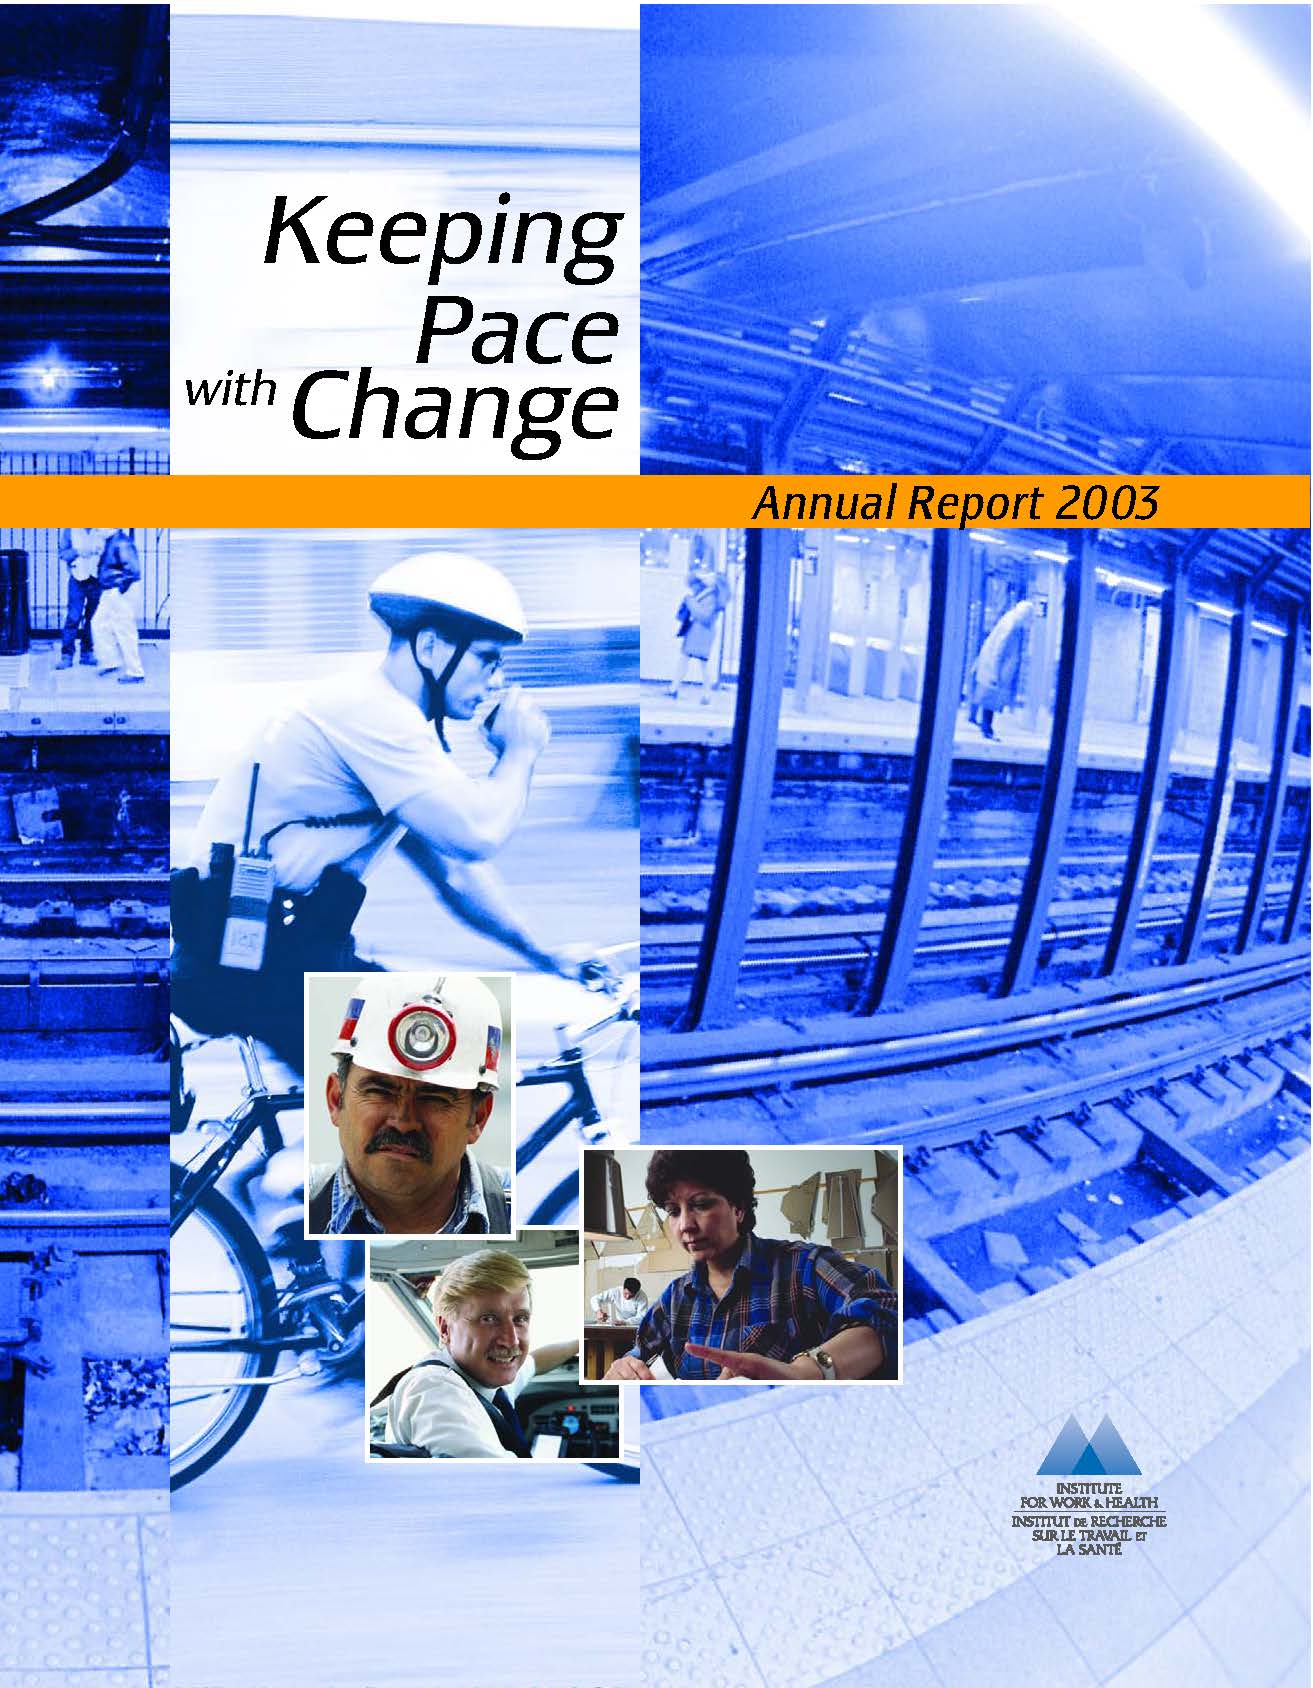 Annual report 2003 cover